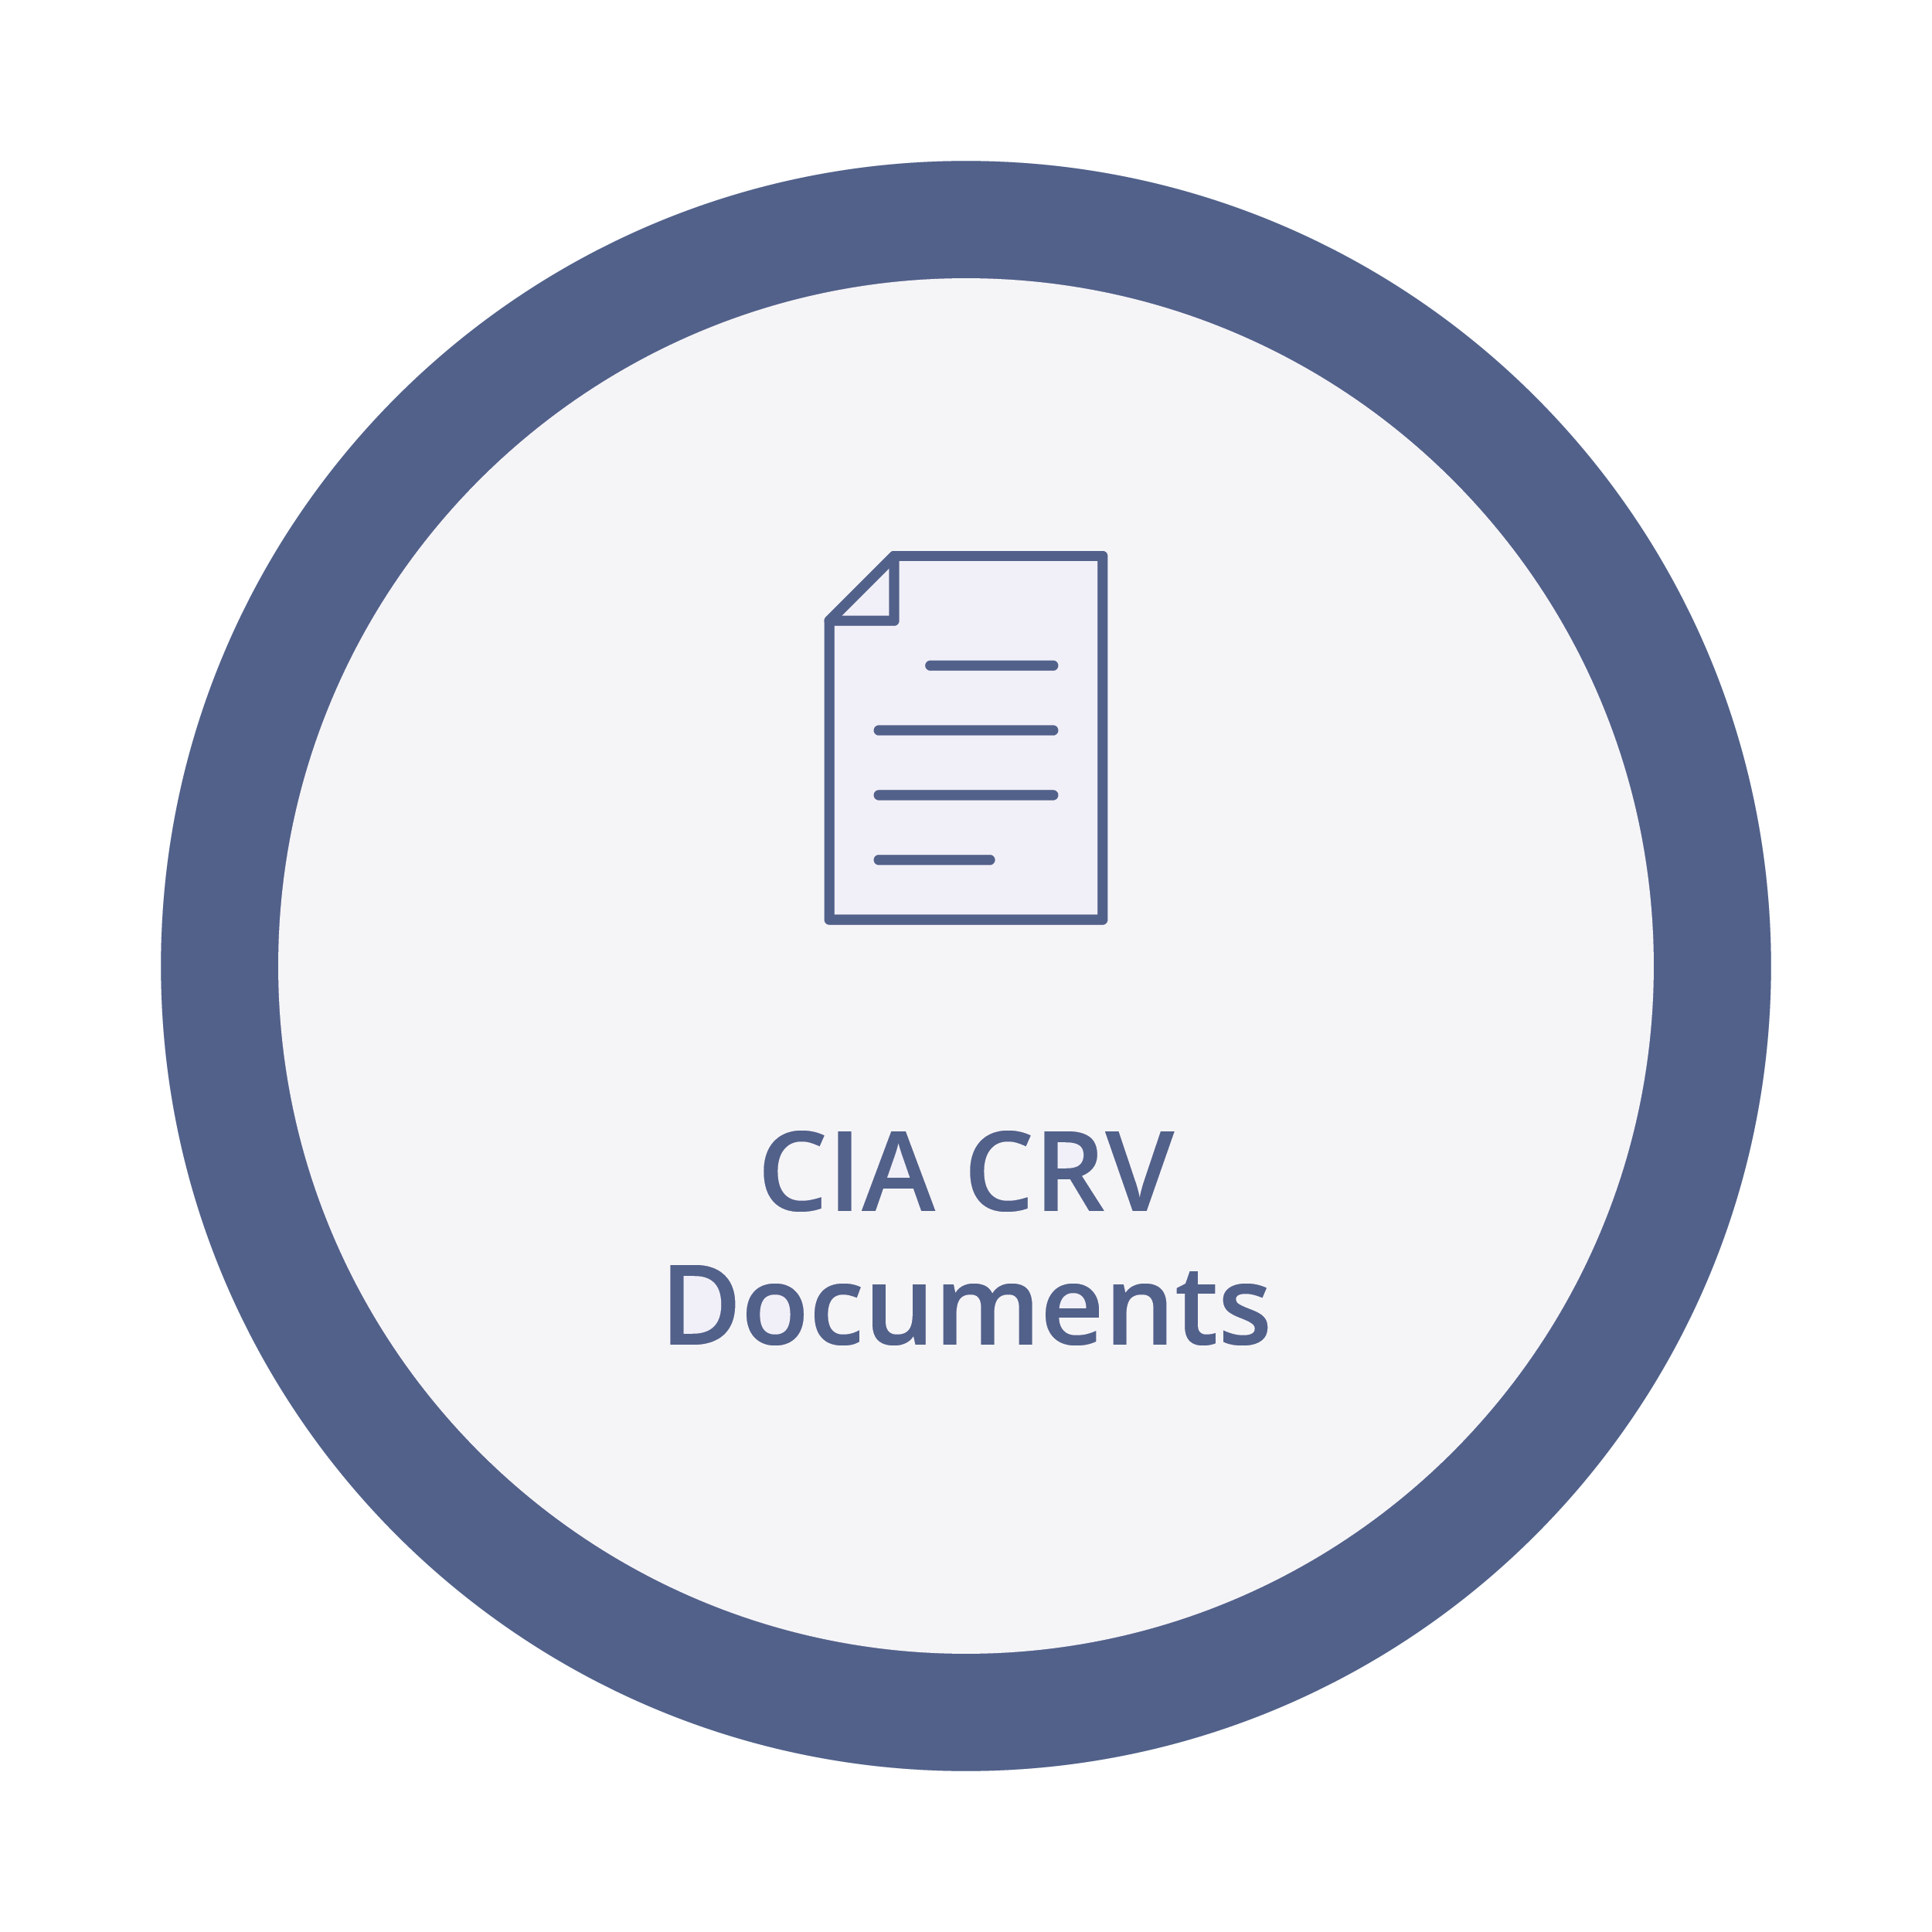  View CIA CRV Documents